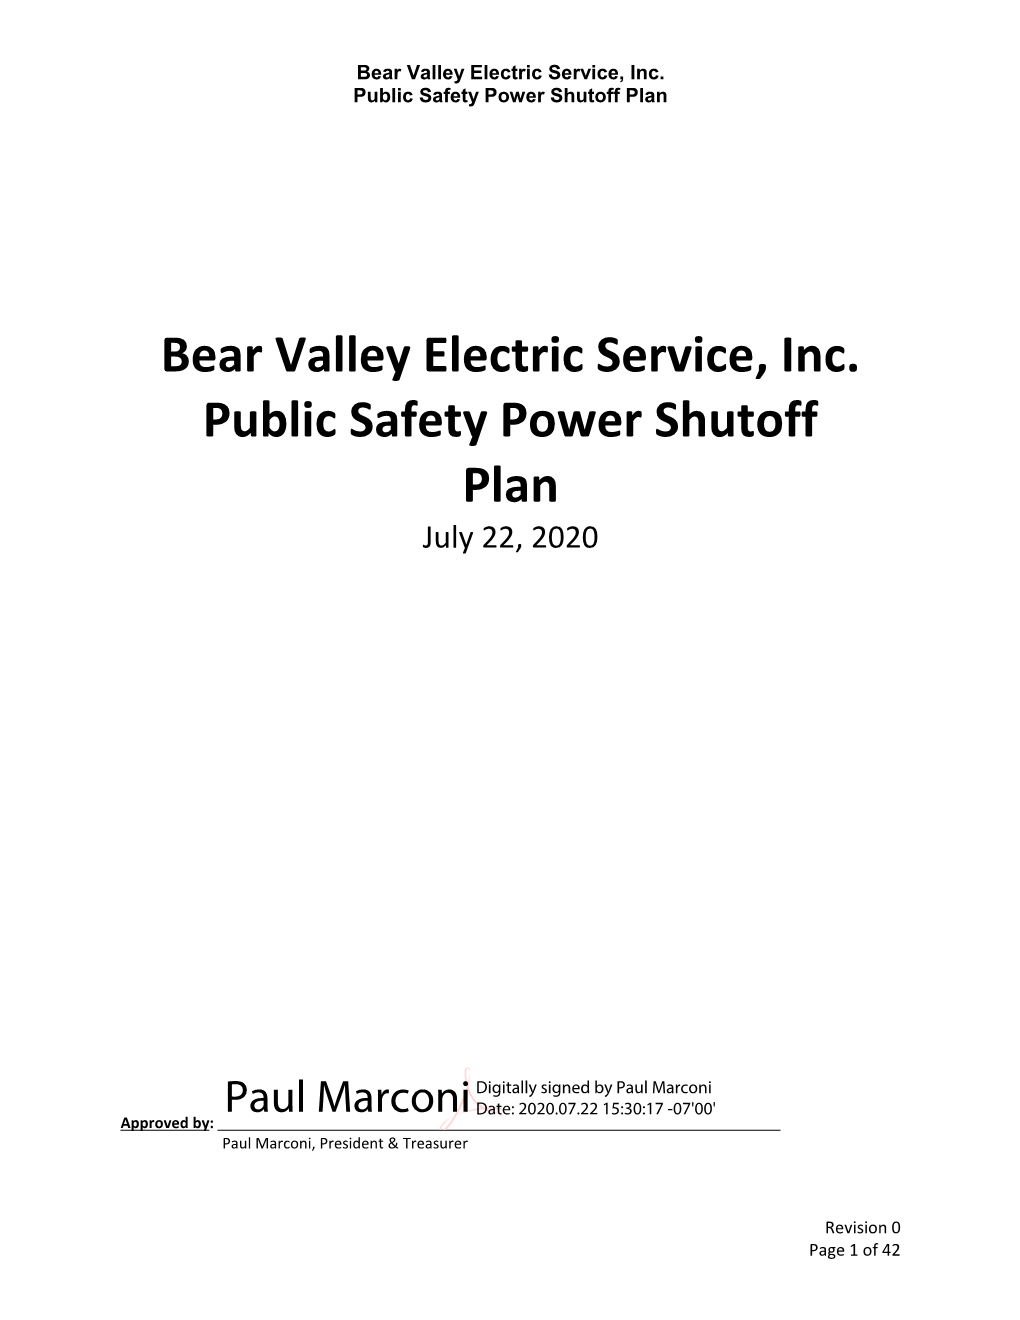 Bear Valley Electric Service, Inc. Public Safety Power Shutoff Plan